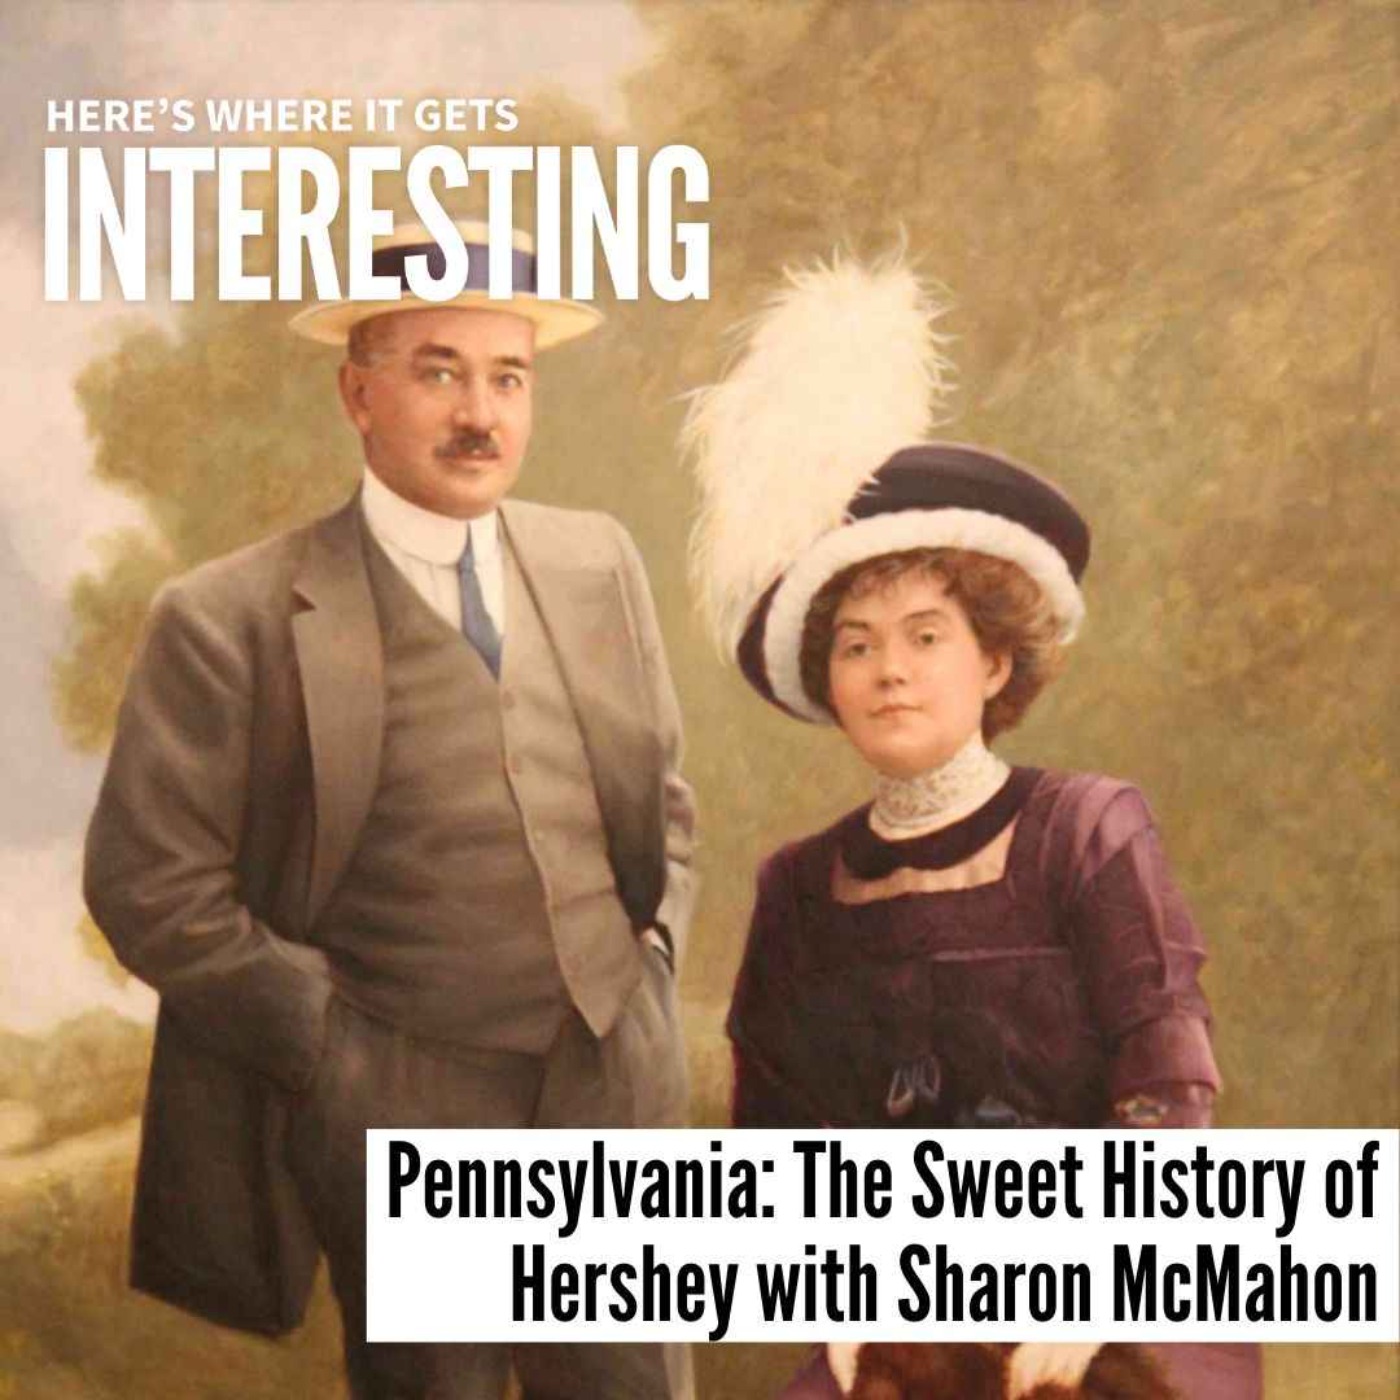 Pennsylvania: The Sweet History of Hershey with Sharon McMahon